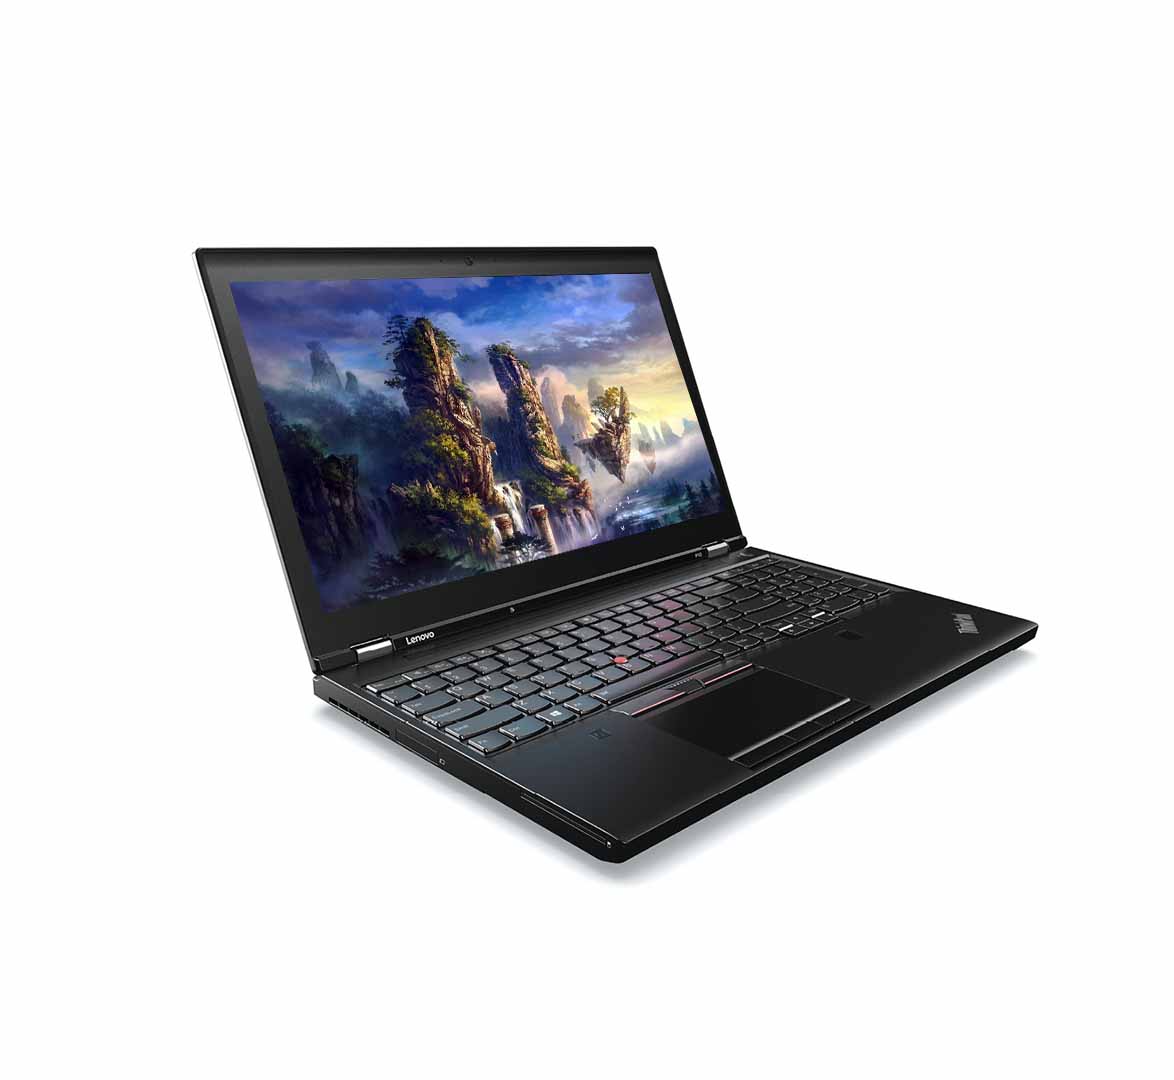 Lenovo ThinkPad P50s Business Laptop, Intel Core i7-6th Gen CPU, 16GB RAM, 512GB SSD, 15.6 inch Display, Windows 10 Pro, Refurbished Laptop